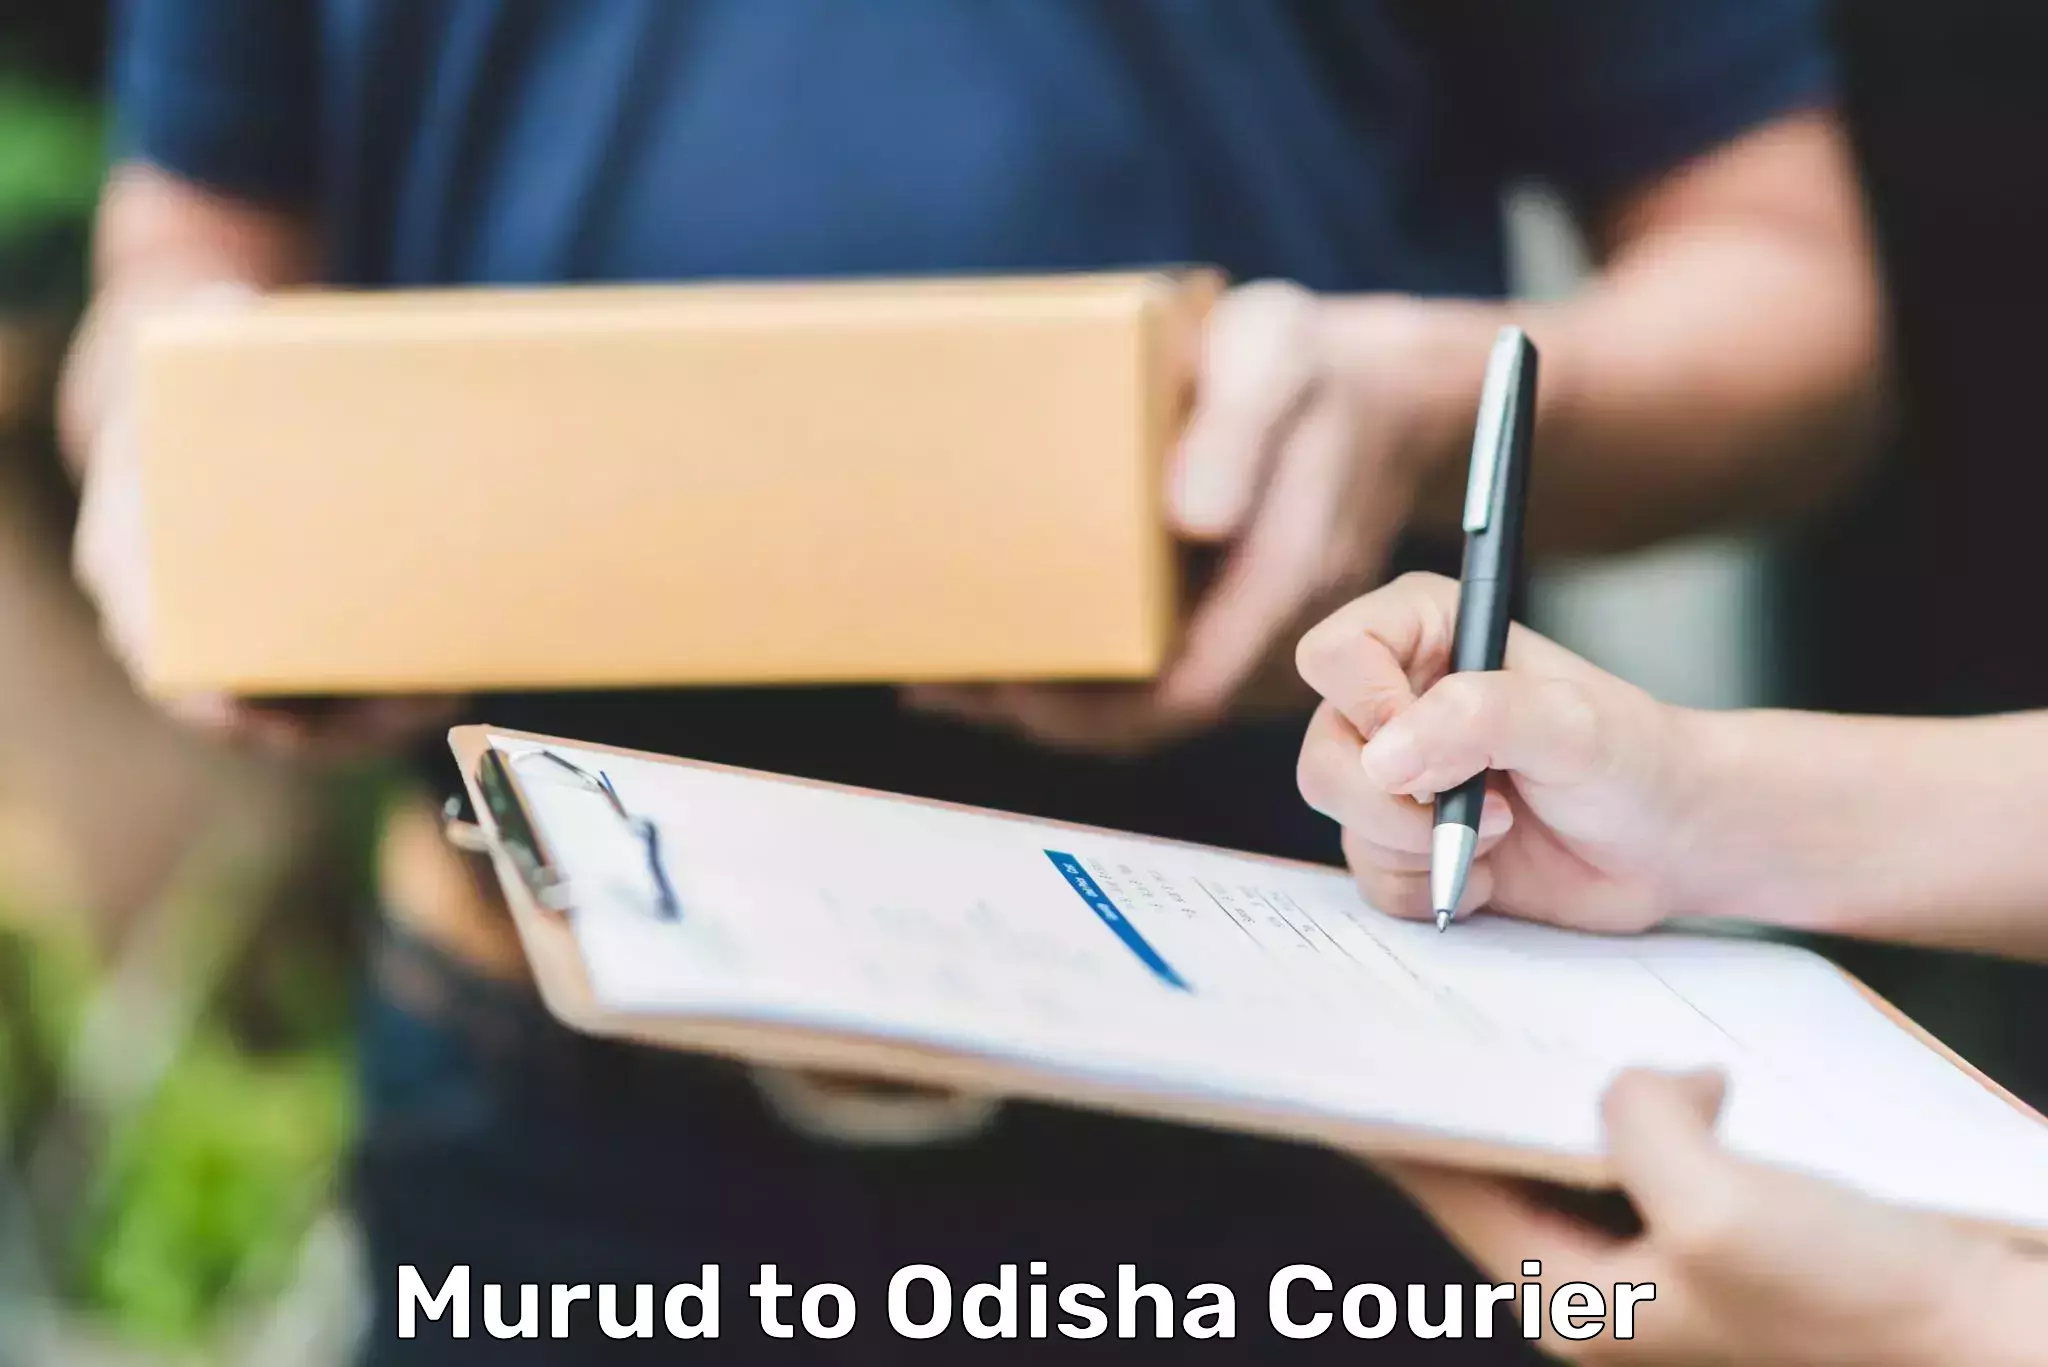 Courier service comparison Murud to Nilagiri